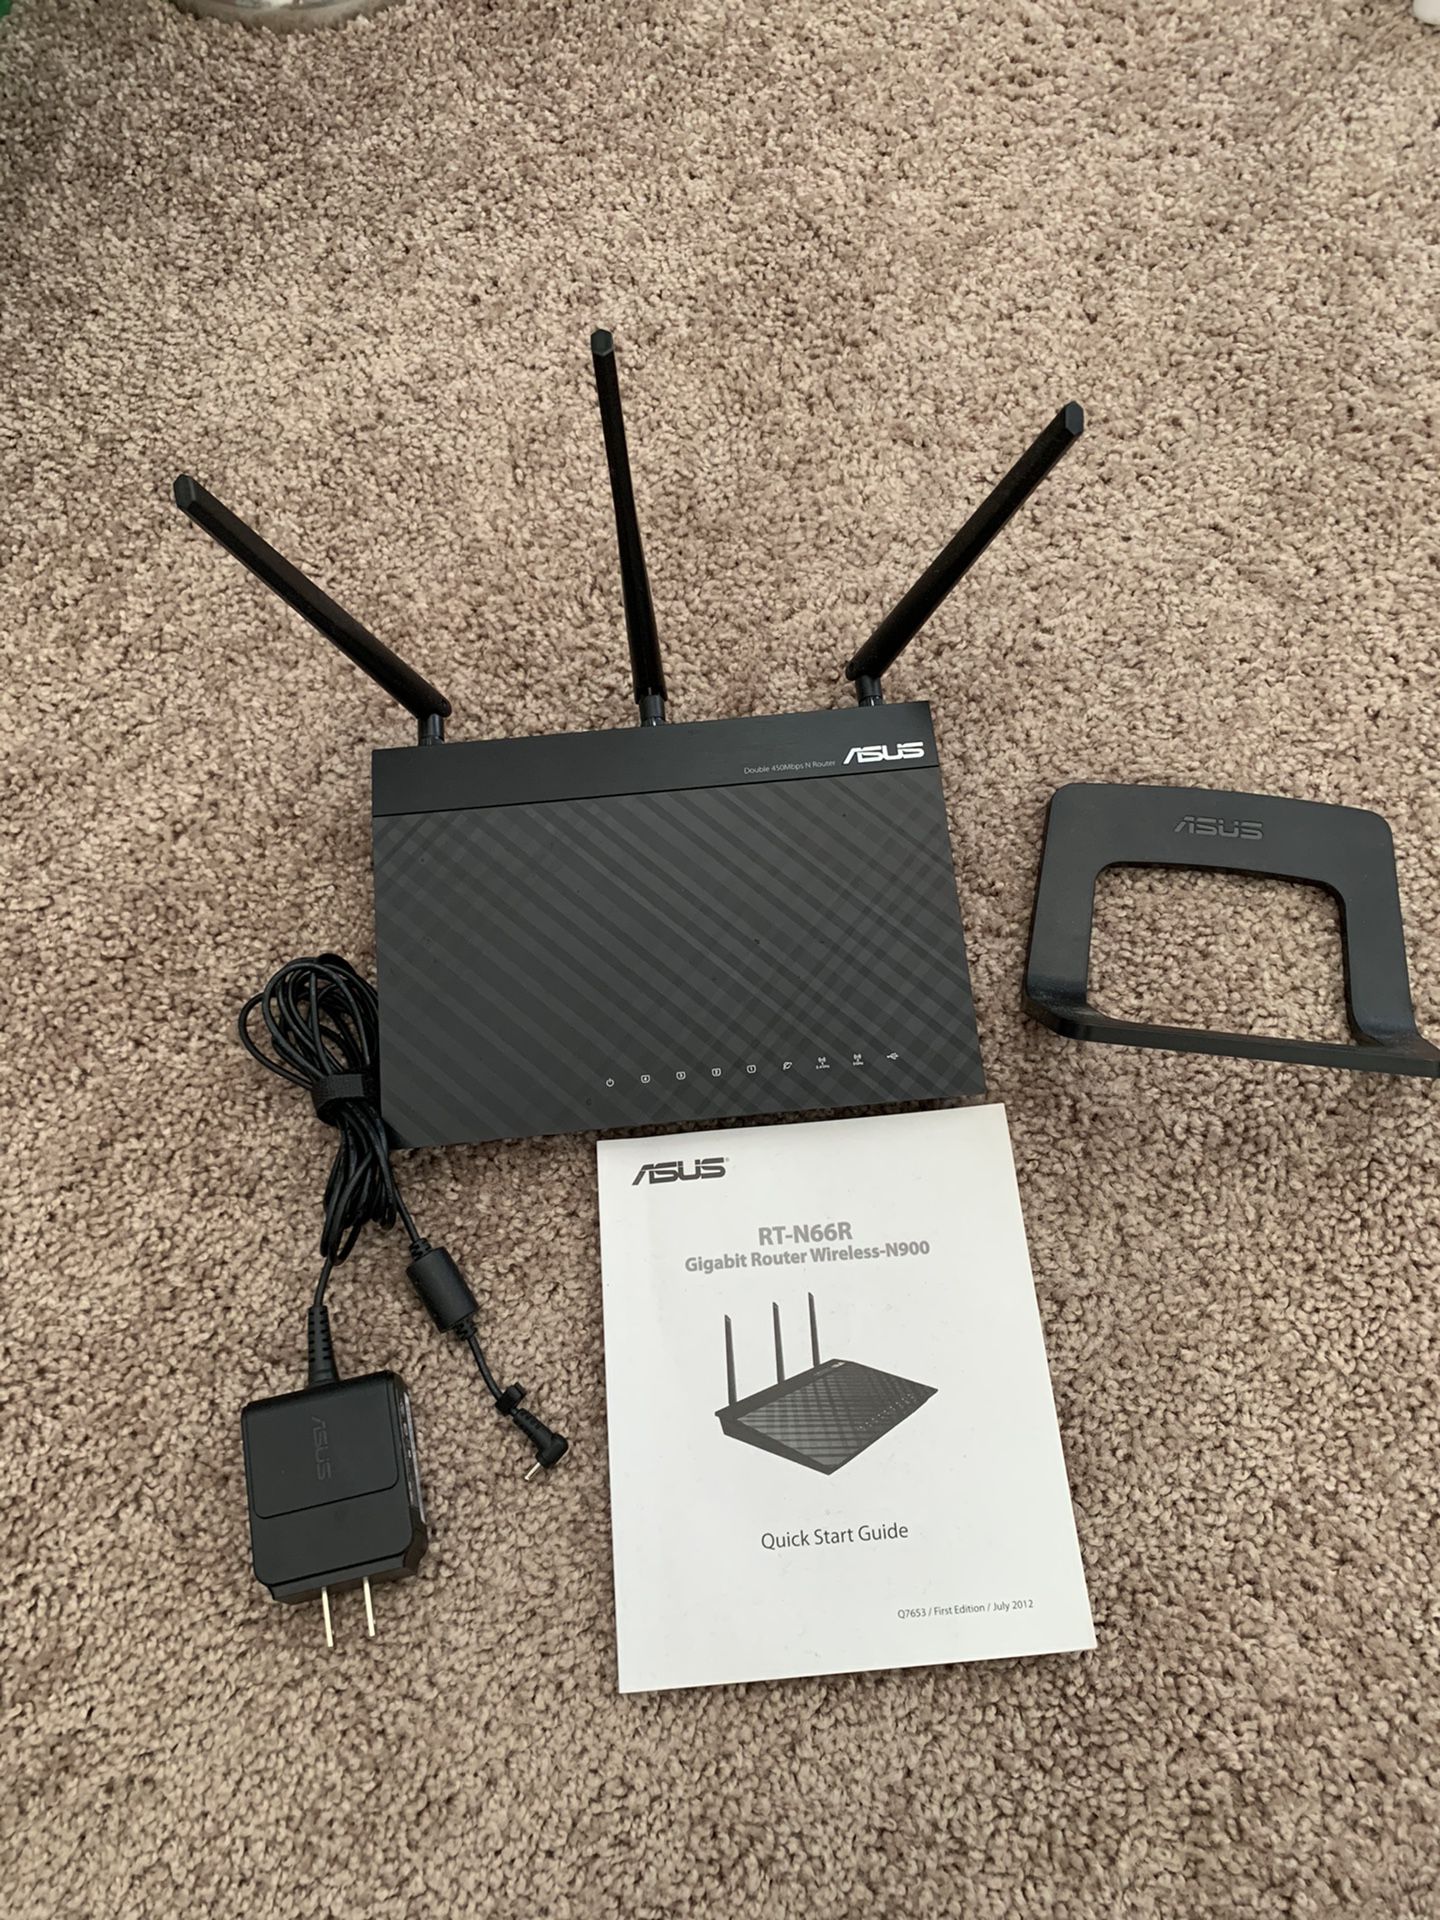 Asus Wireless Gigabit router